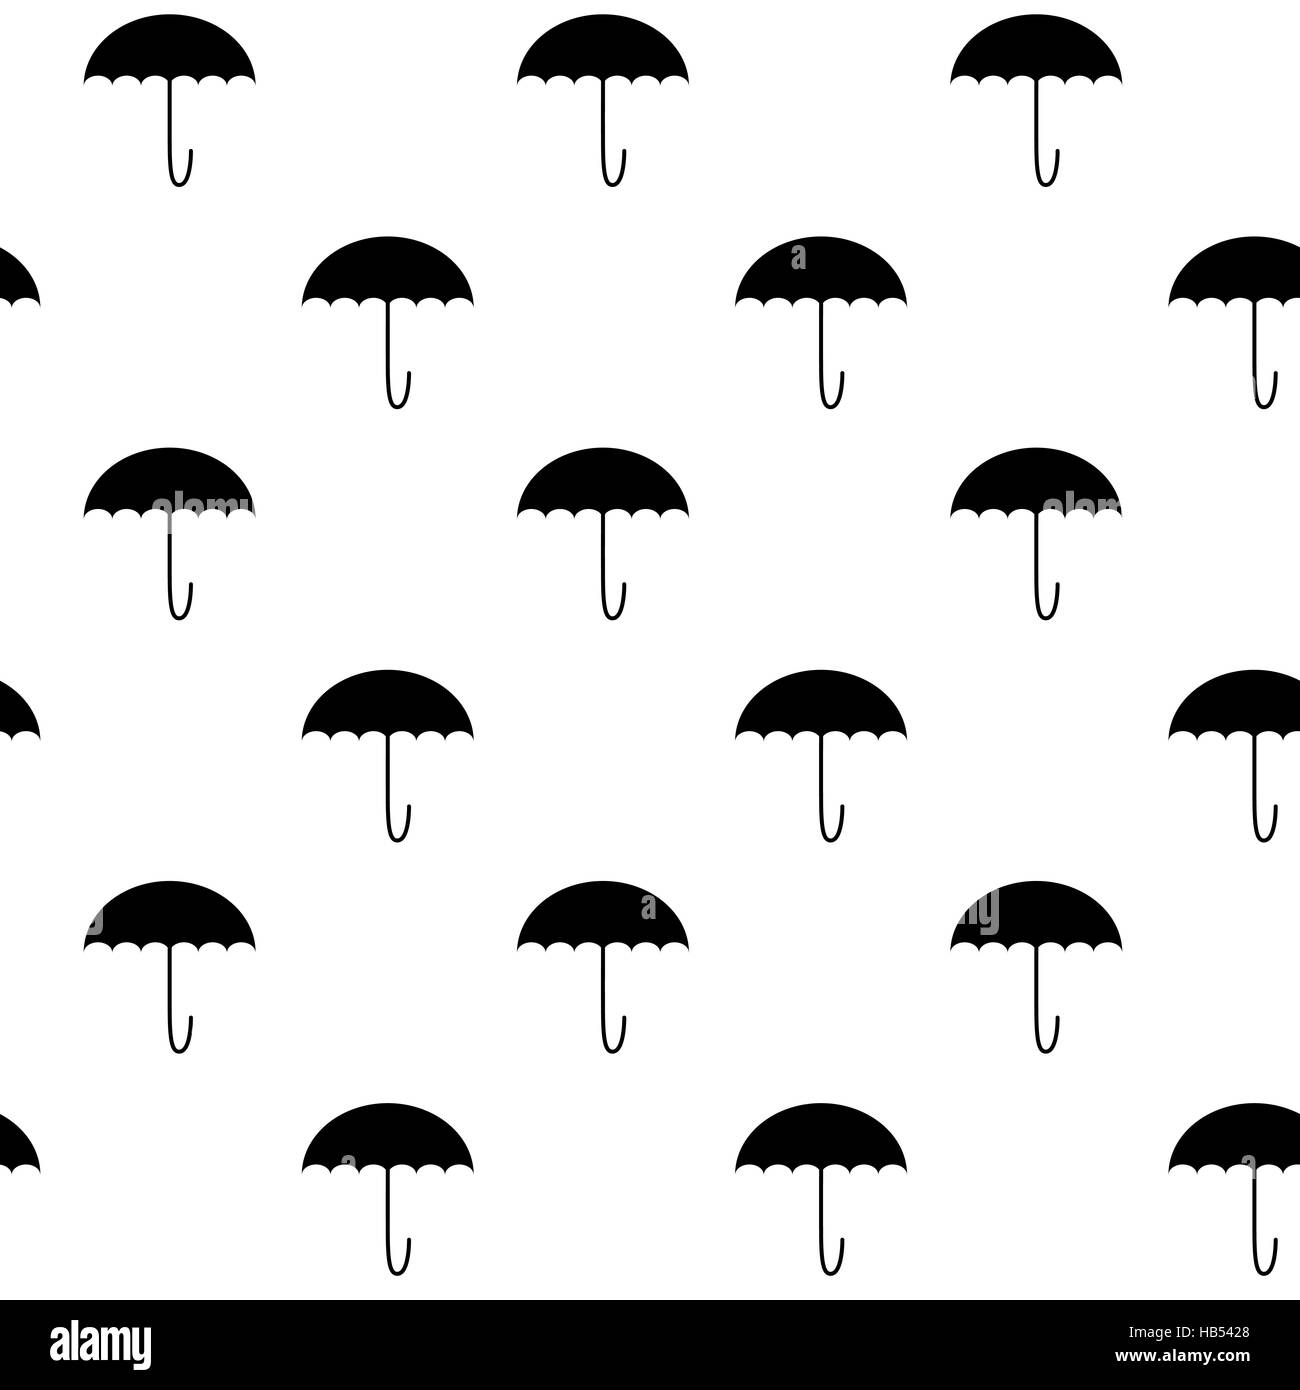 Black white pattern umbrella. Insurance concept and umbrella protection, vector illustration Stock Photo